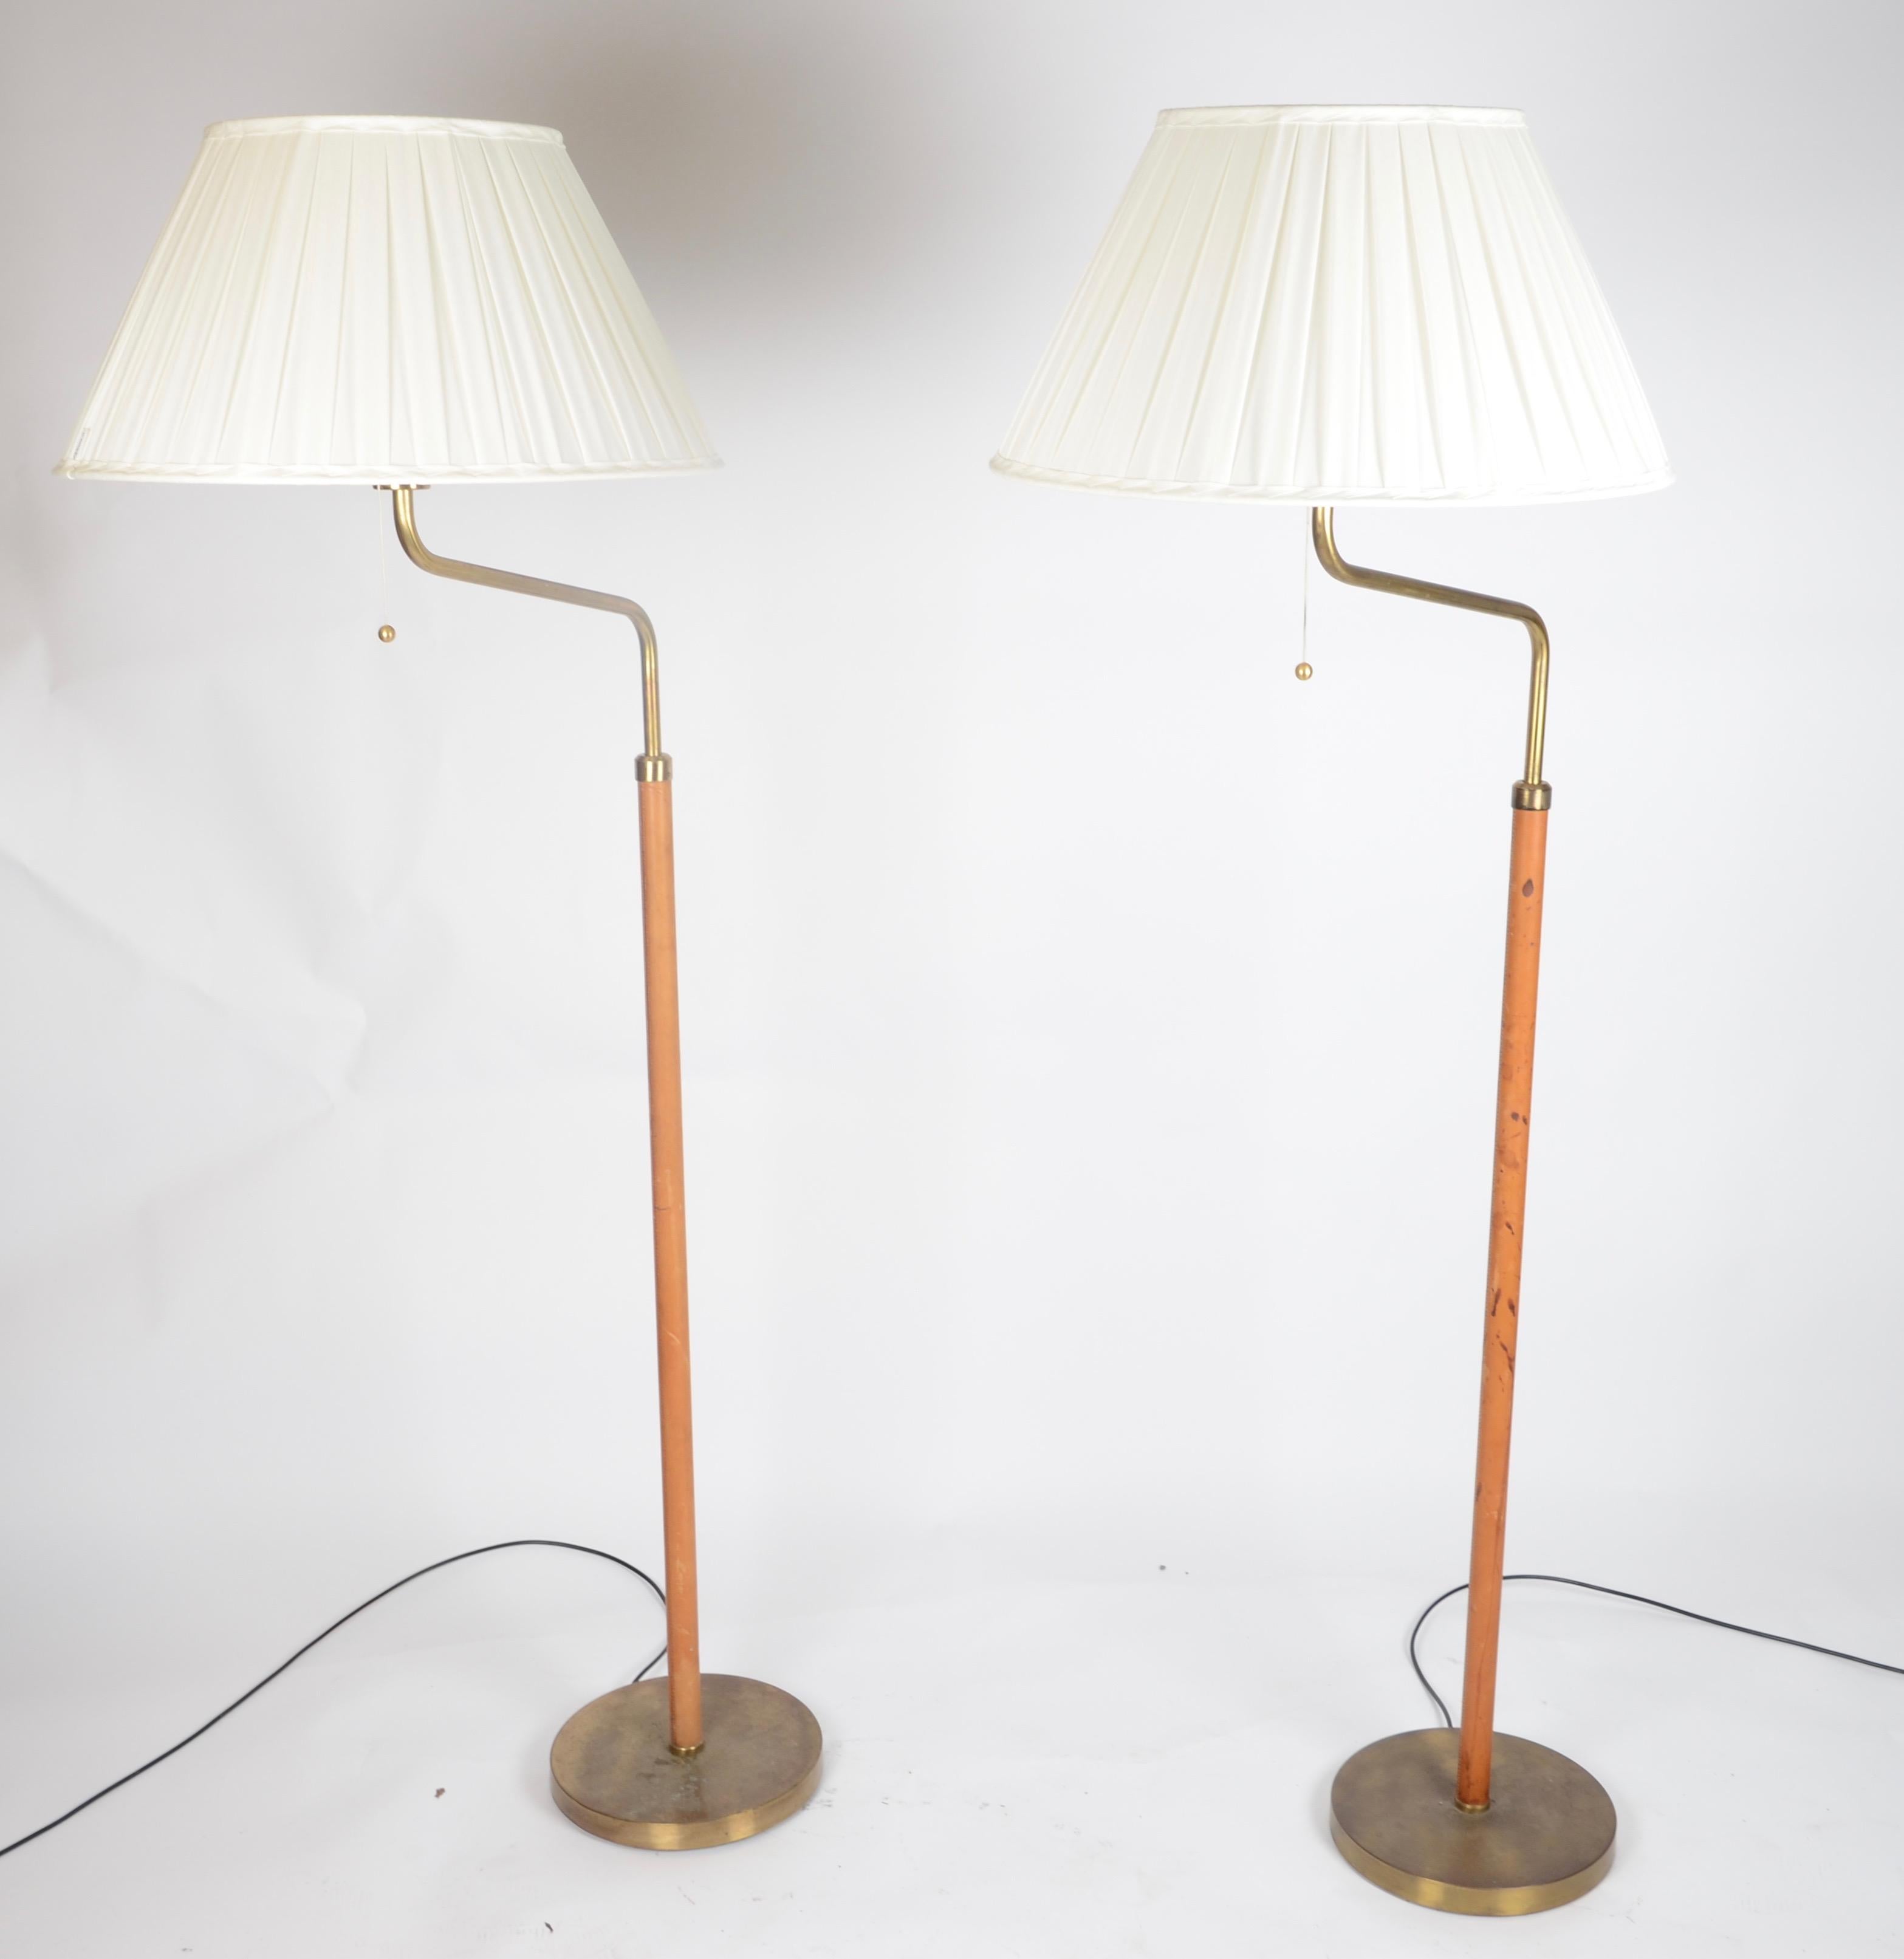 20th Century Bertil Brisborg, Floor Lamps, Designed for NK, Sweden, 1940s-1950s